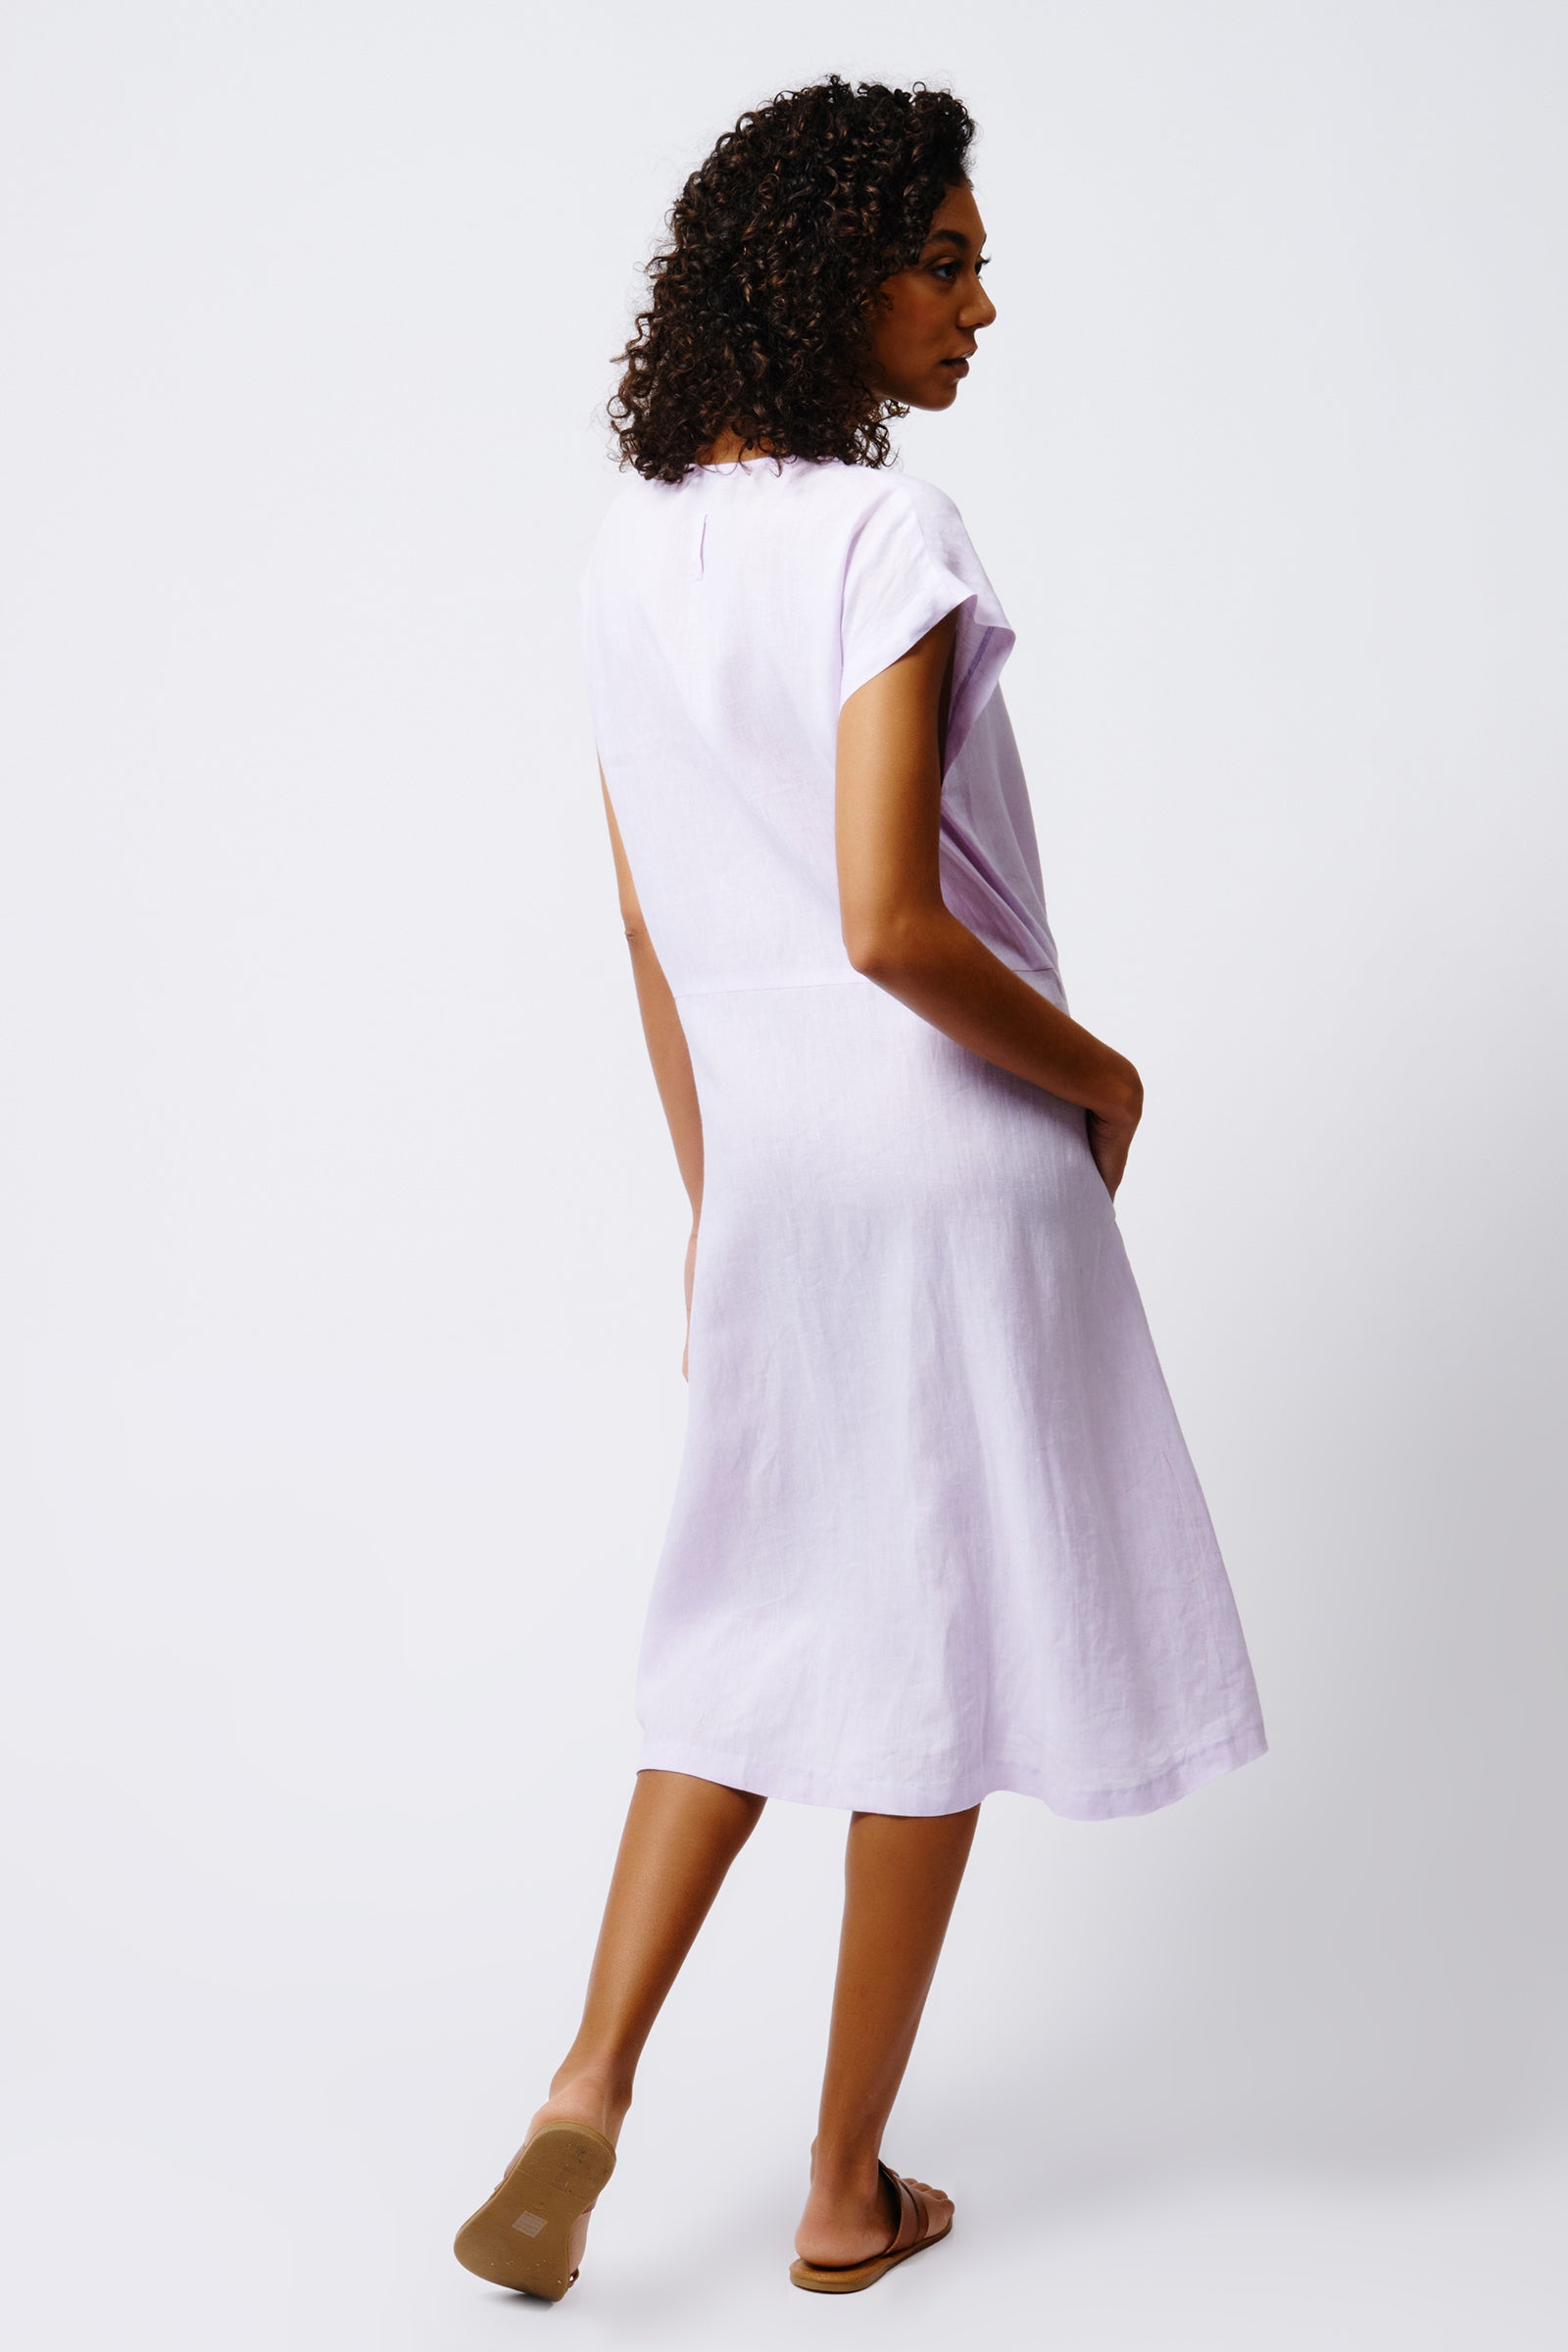 Kal Rieman Harlow Cap Sleeve Dress in Lavender Linen on Model Front View Full 3